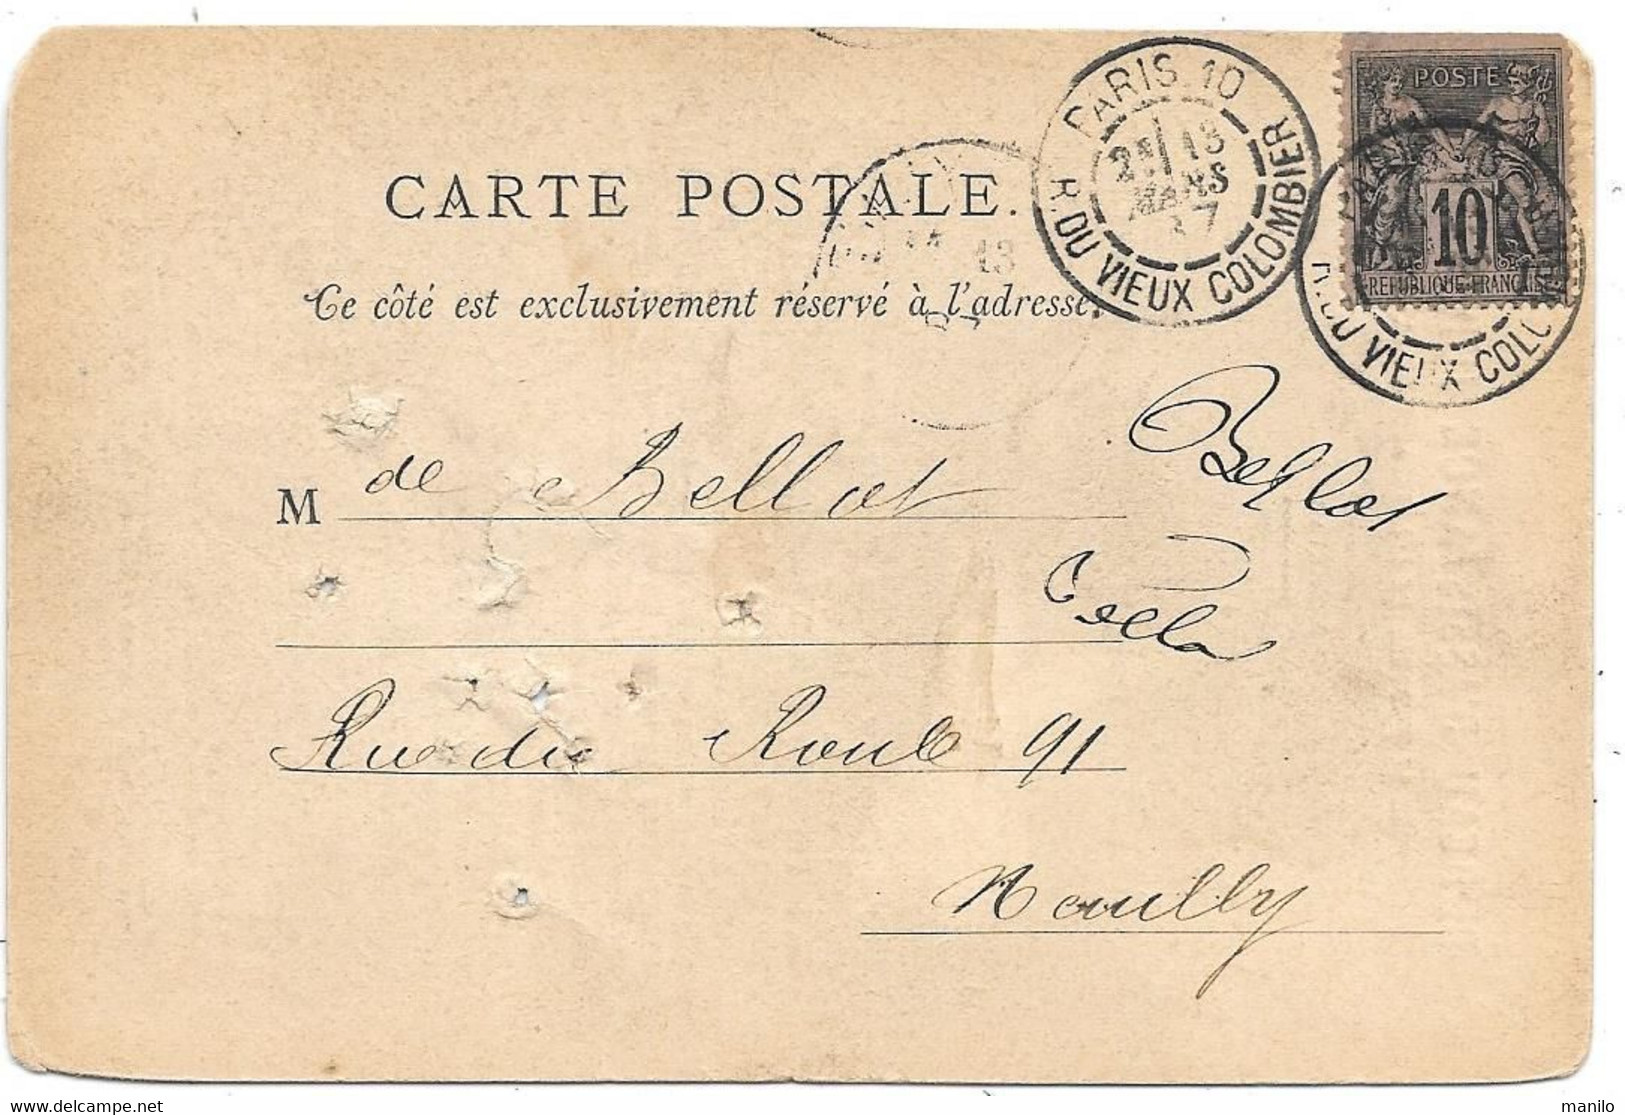 Carte Précurseur Repiquage BUREAU ASSISTANCE JUDICIAIRE 1887 (Refus) Timbre Type SAGE  Paris - Neuilly S/seine -65542 - Cartoline Precursori